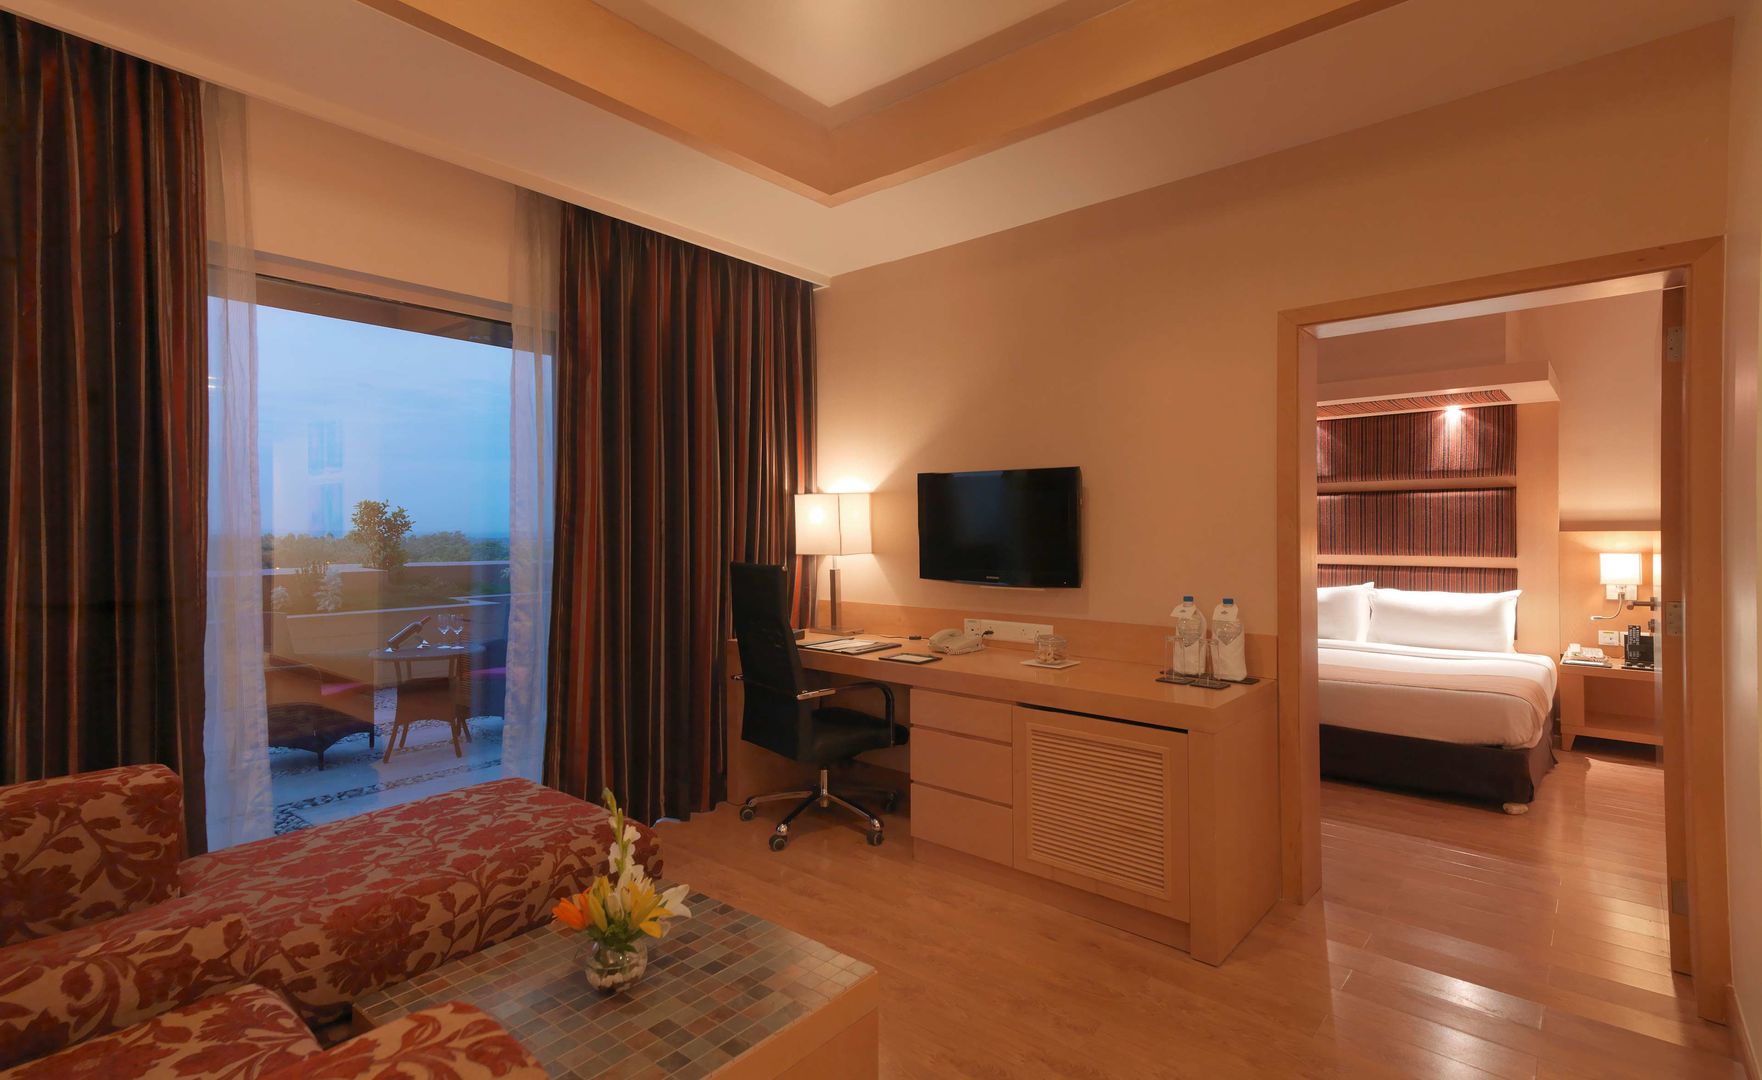 HOTEL ROSE INN | ⋆⋆⋆ | TA'IF, SAUDI ARABIA | SEASON DEALS FROM $79